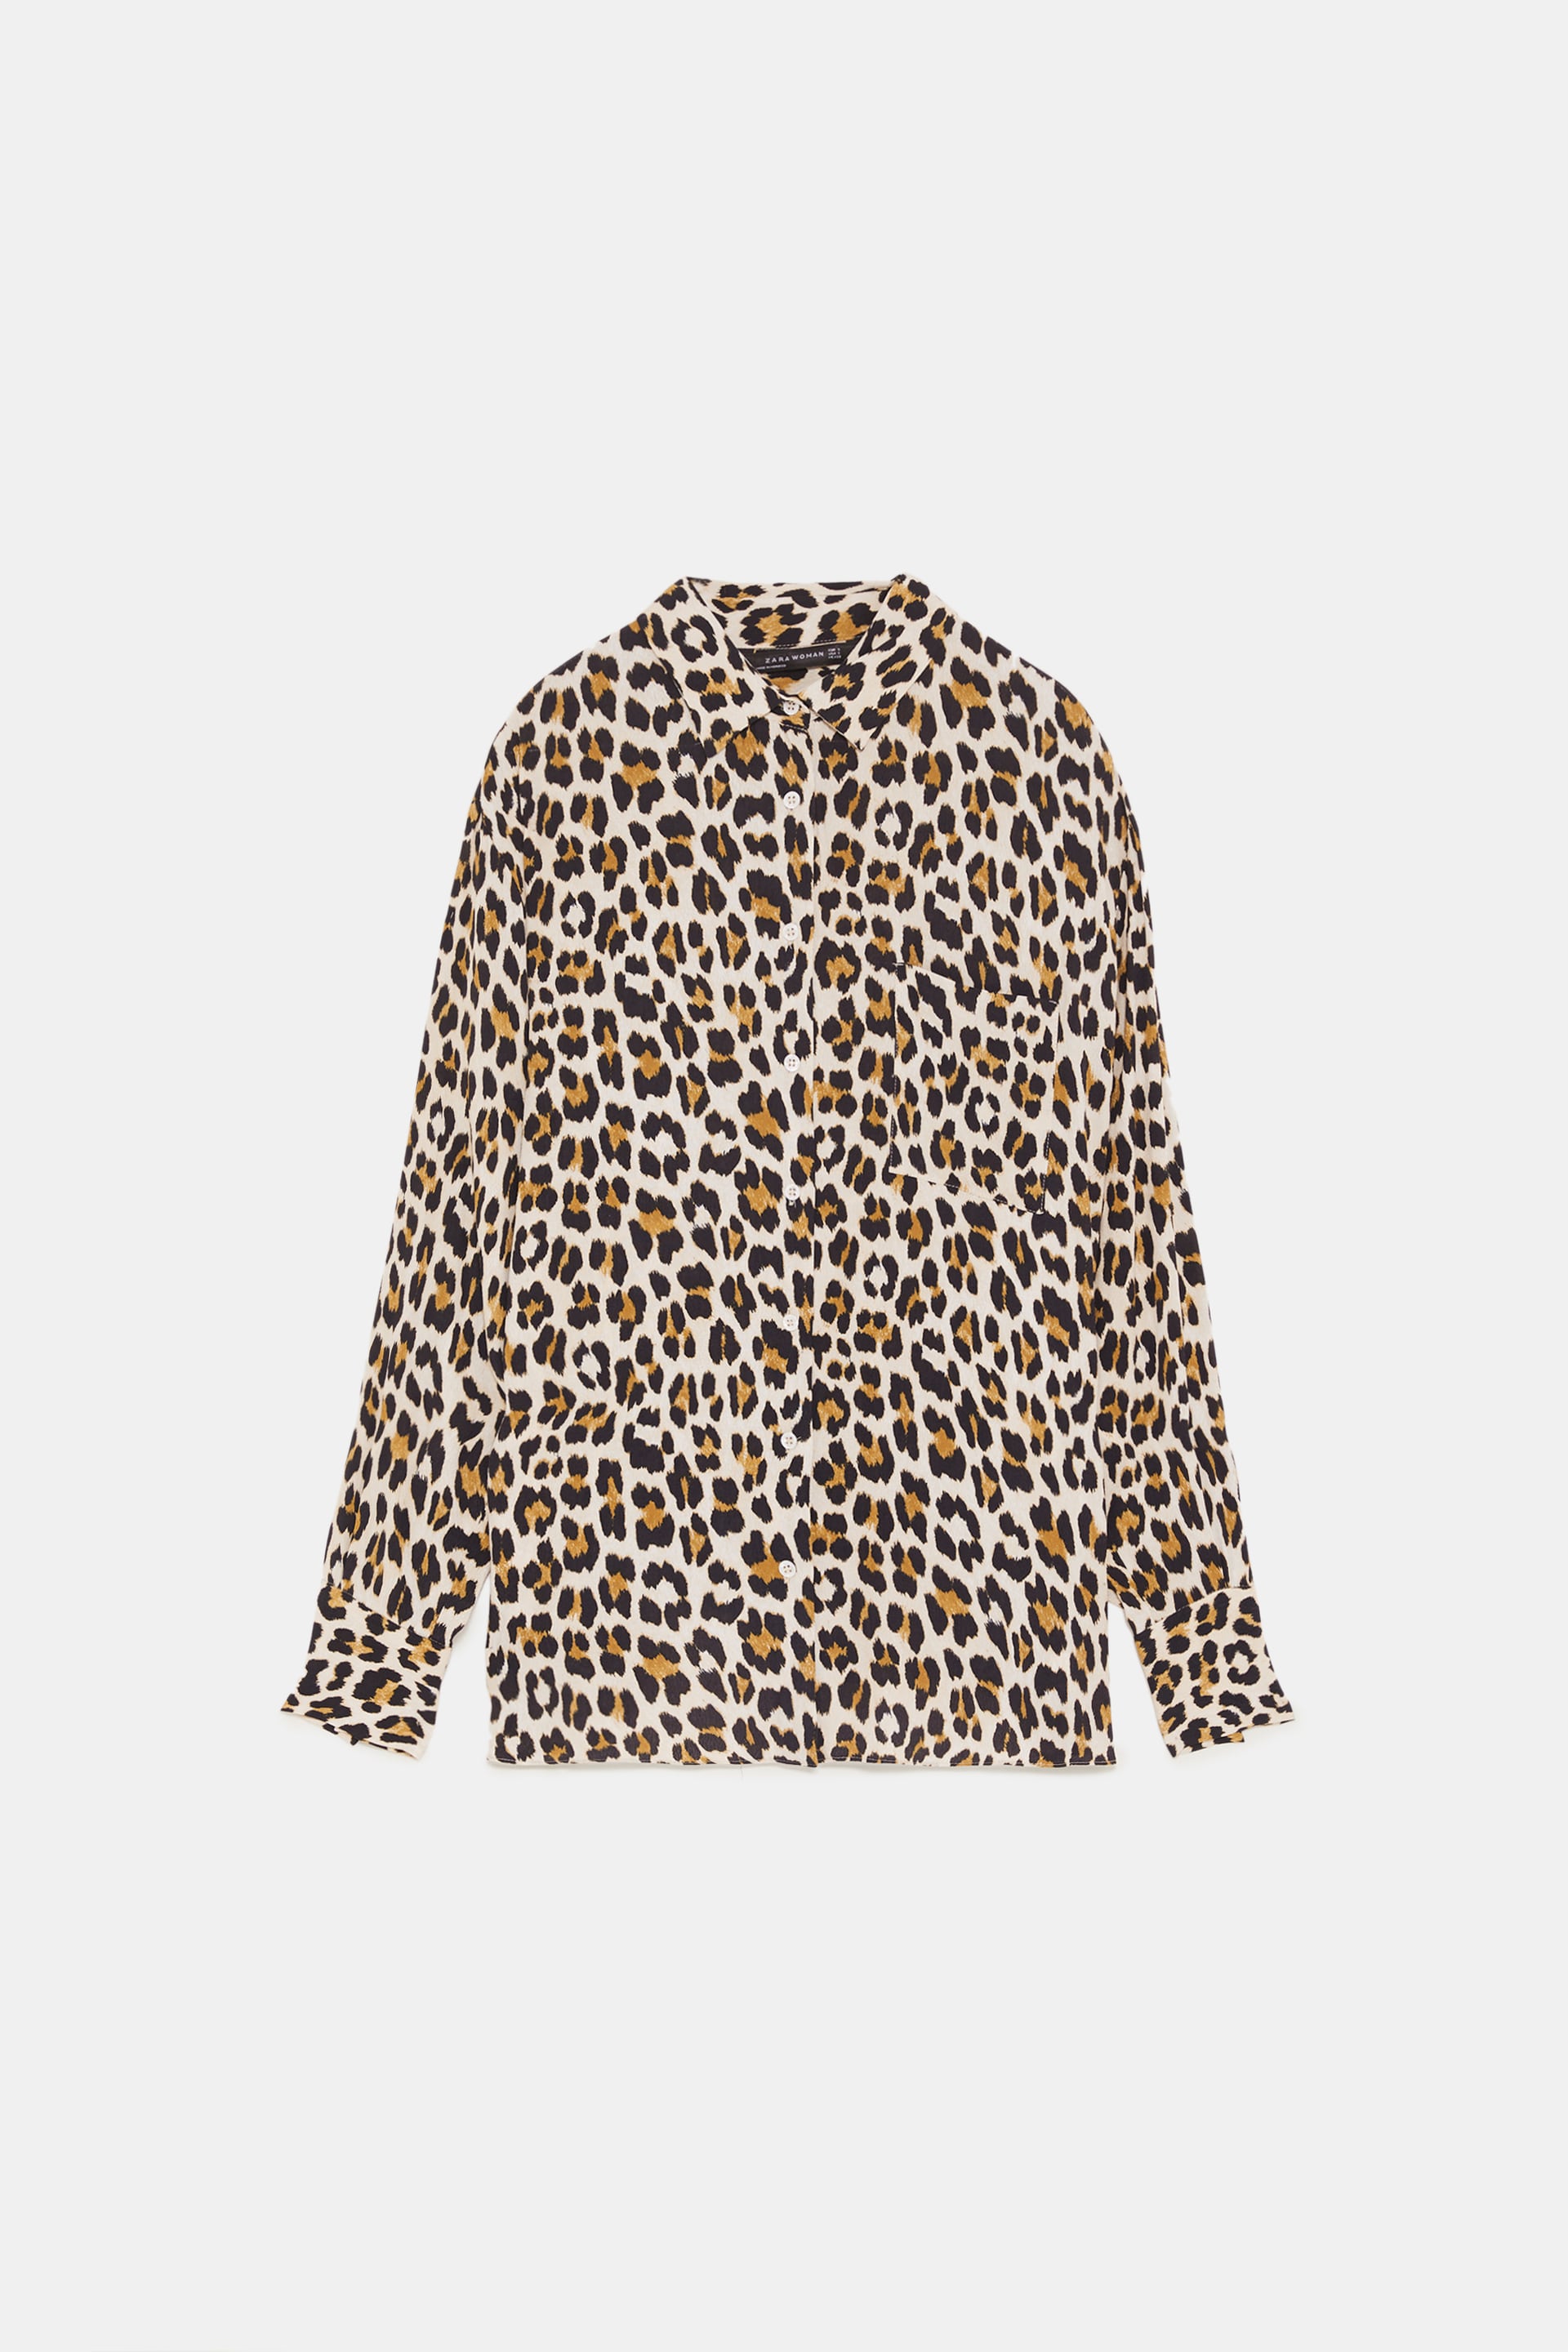 Zara Leopard Print Blouse